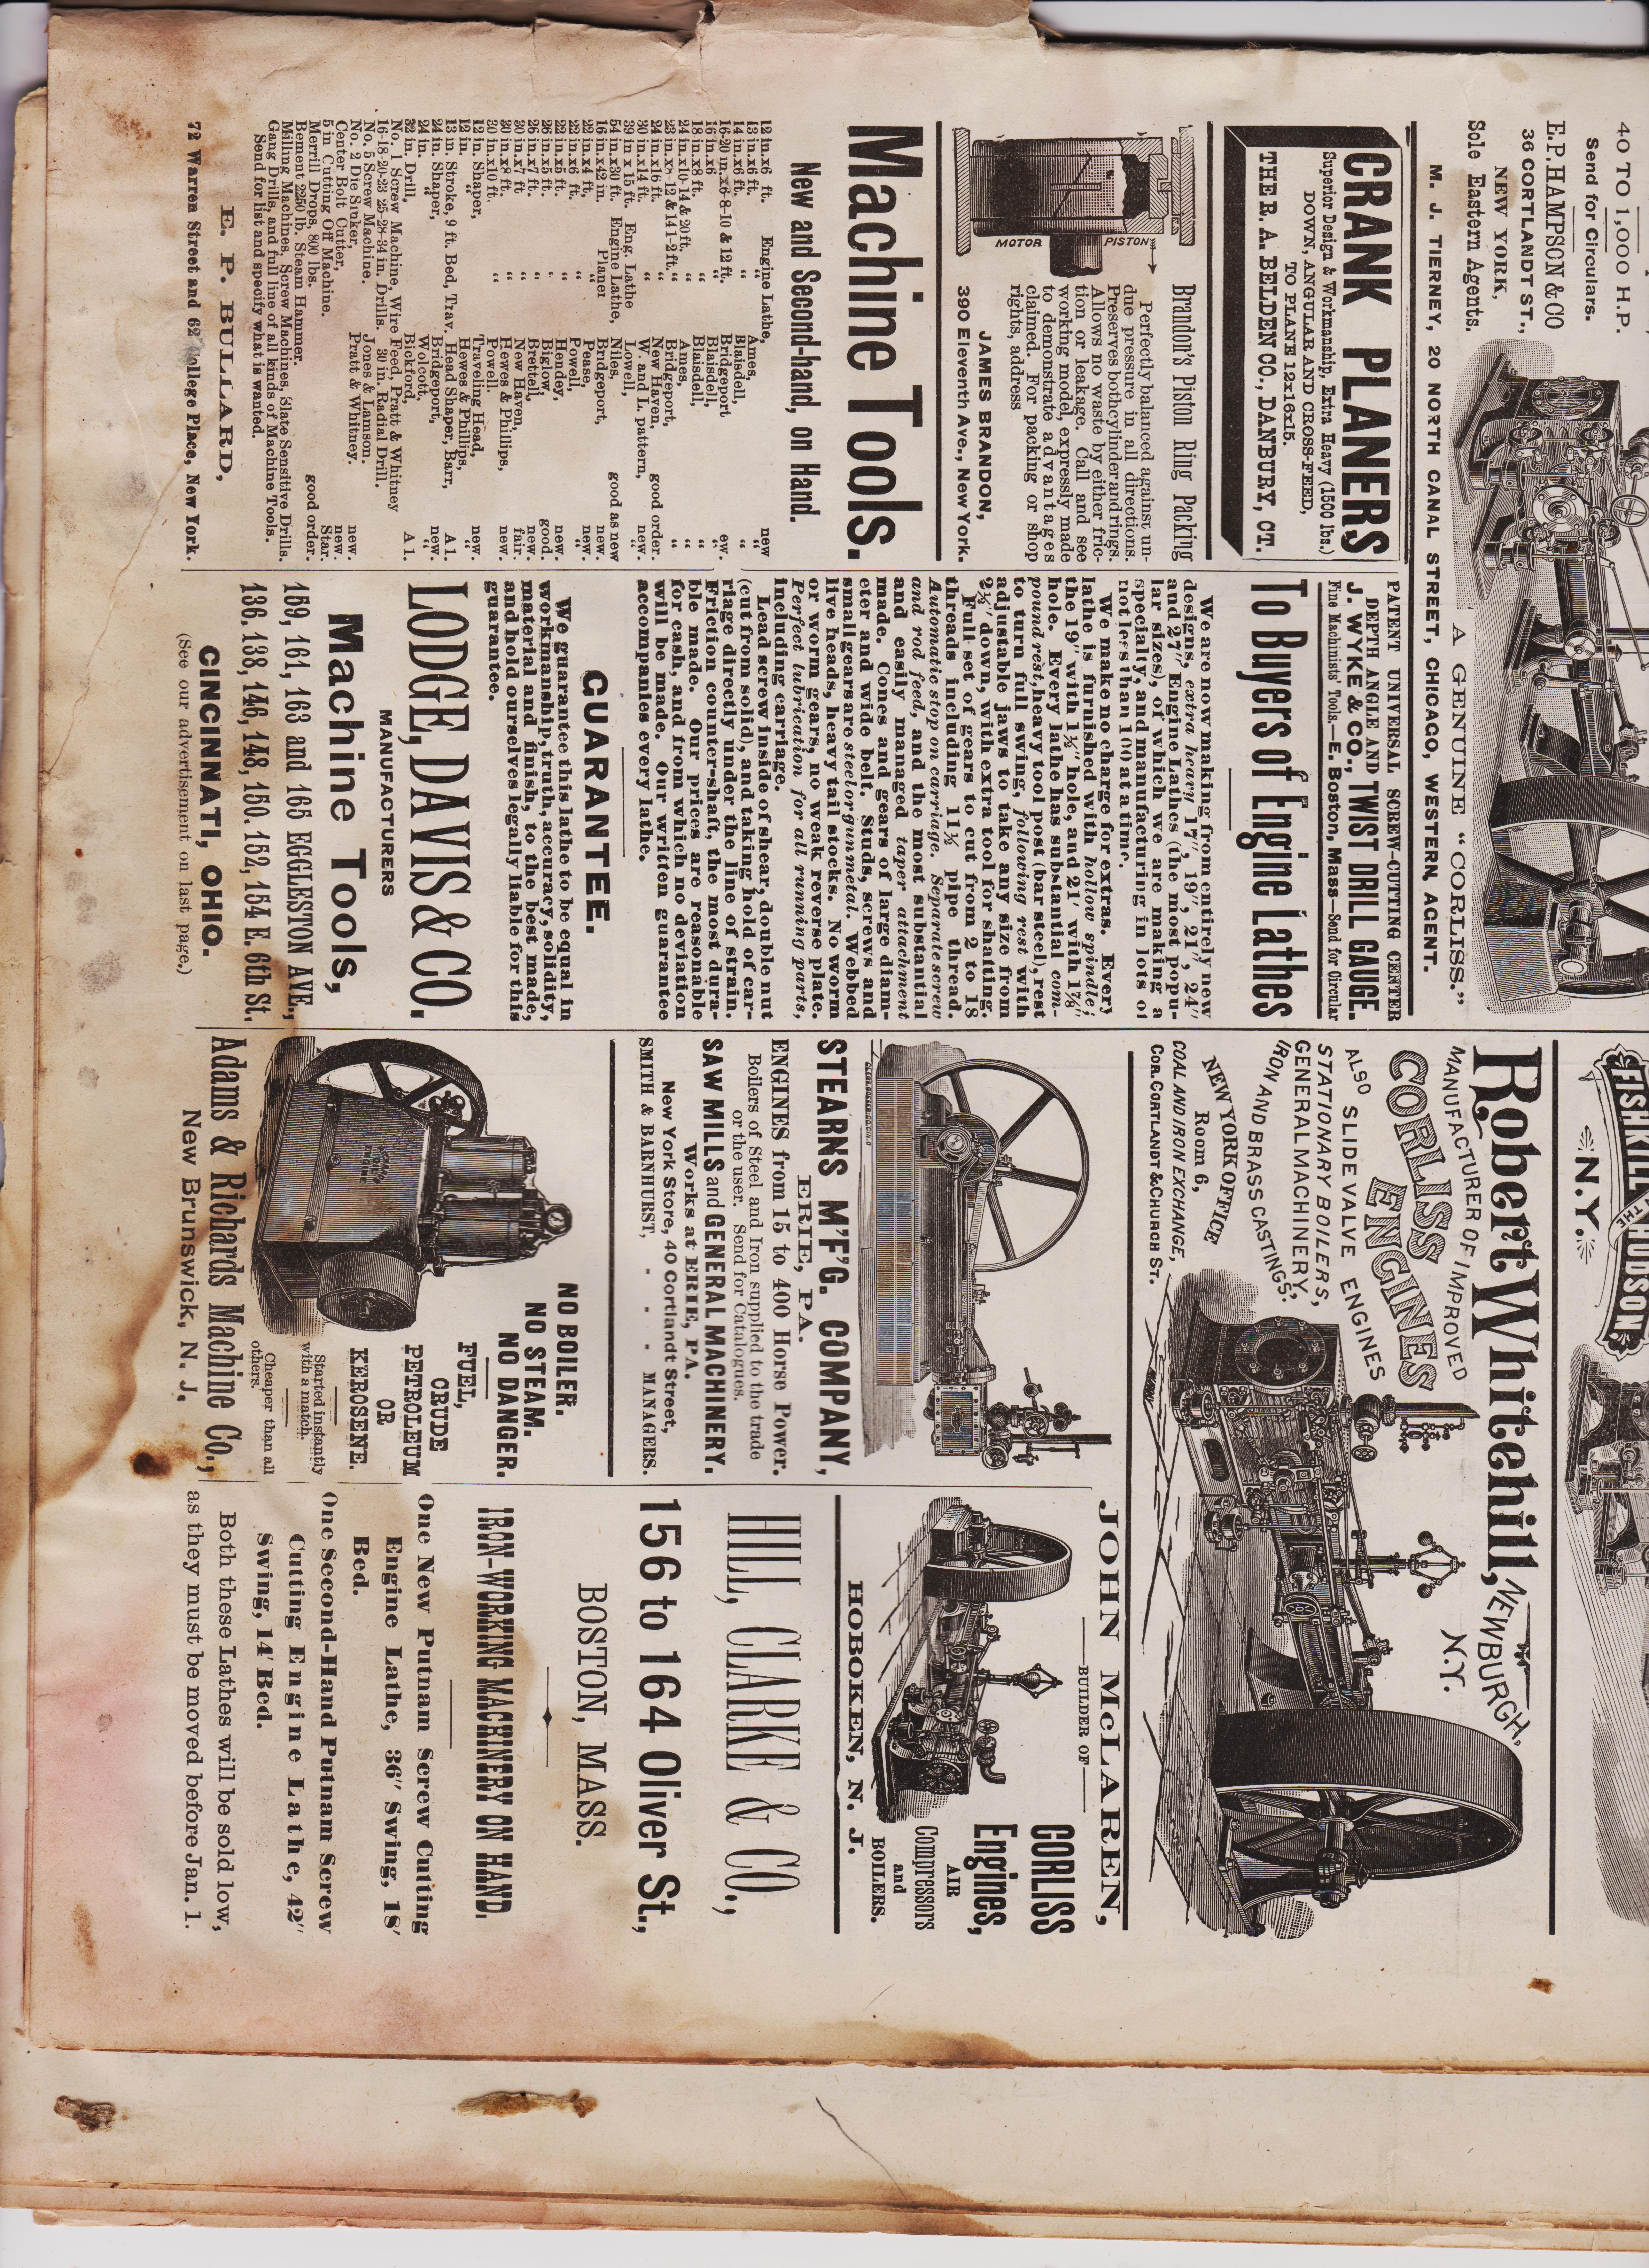 https://antiquemachinery.com/images-1887/American-Machinist-1887-Dec-31-pg-15-bot-Ads.jpeg